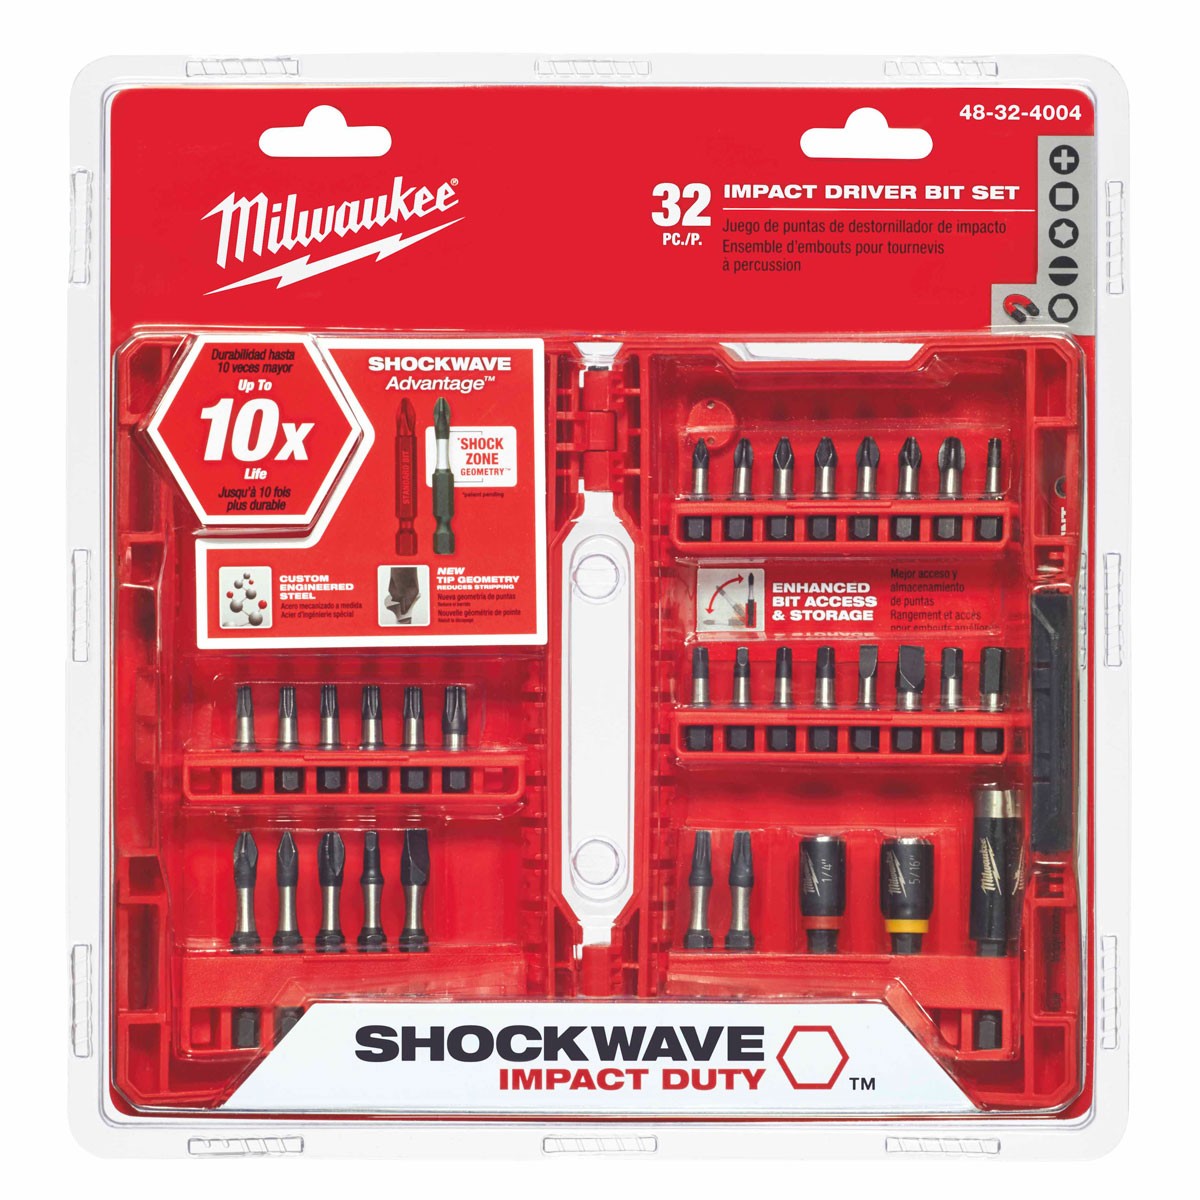 Milwaukee 48-32-4004 Shockwave 32Pc Impact Driver Bit Set